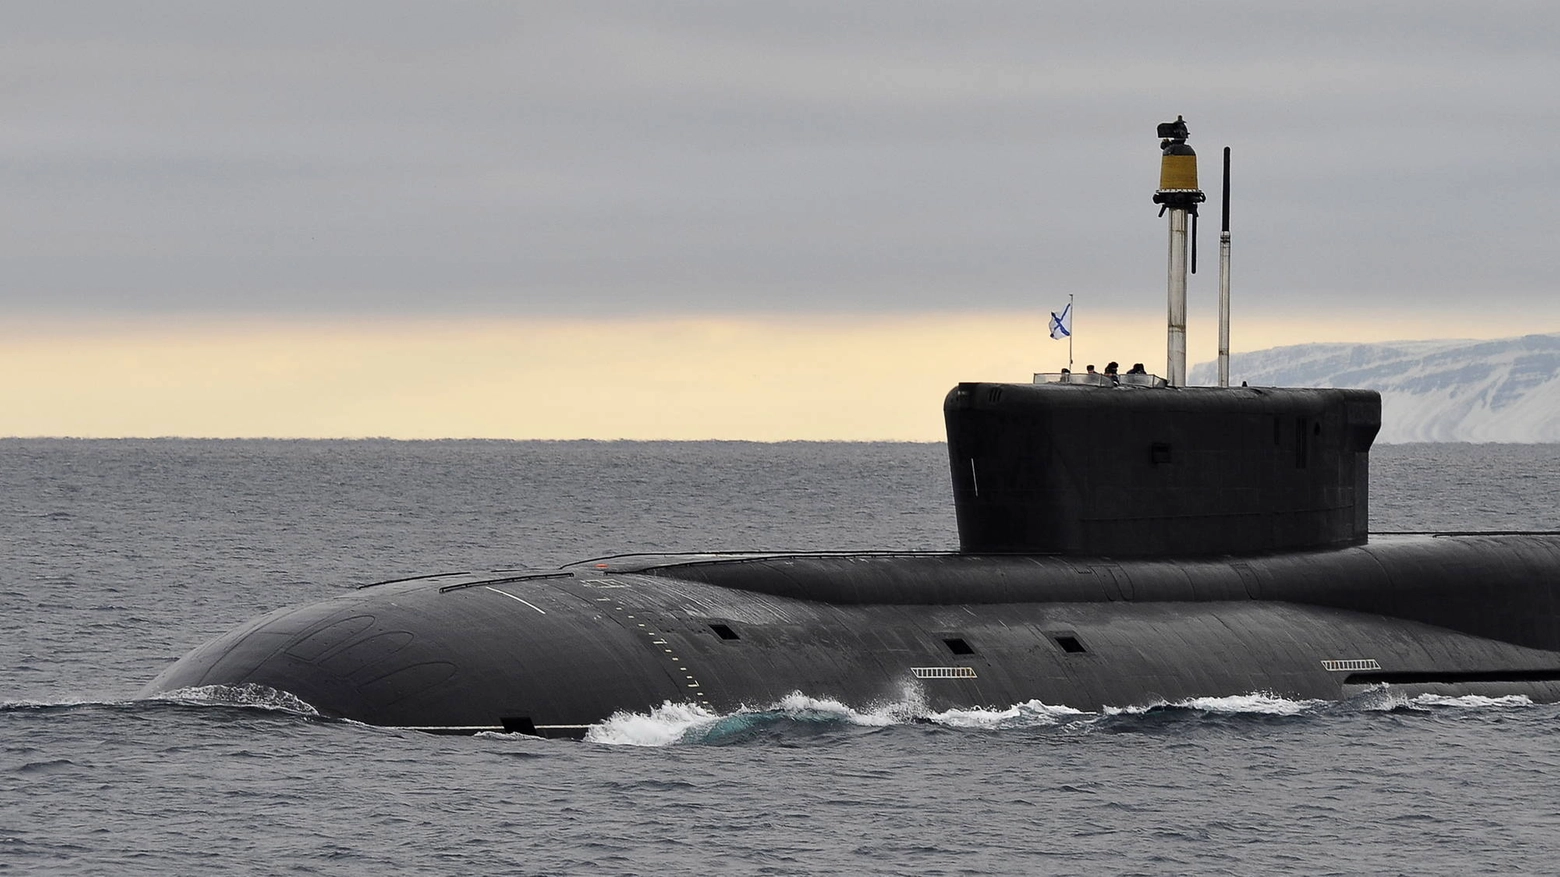 Sottomarino a propulsione nucleare classe “Borey”, il ‘Vladimir Monomakh' (Olycom)